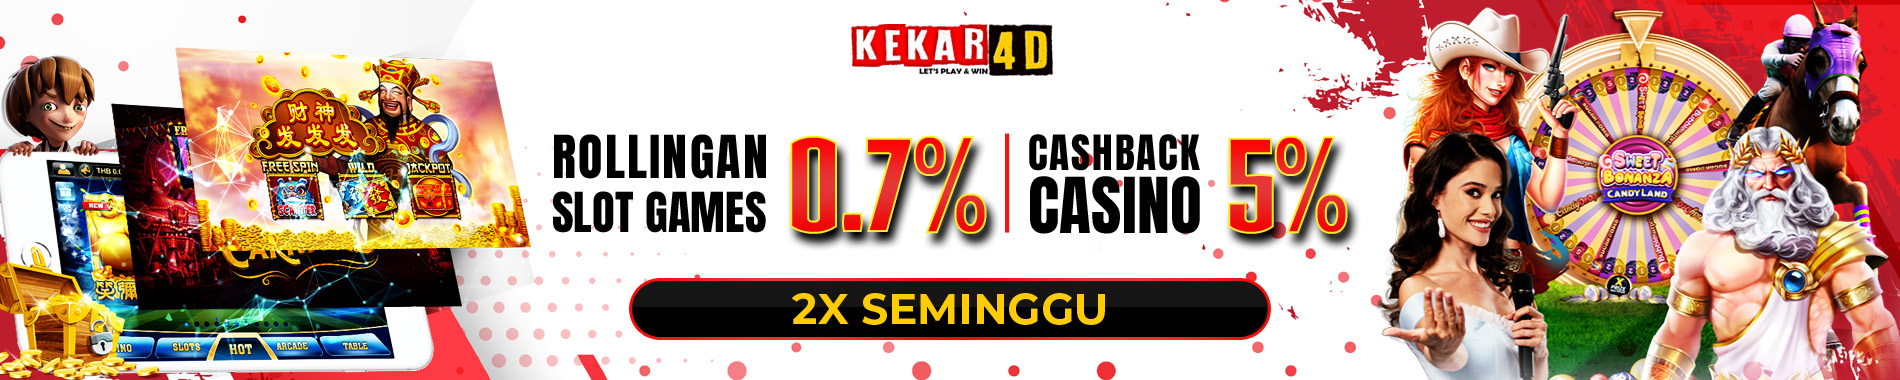 Kekar4d Bandar Togel Online, Slot Online, Live Casino, Sportsbook, Tembak Ikan Terpercaya